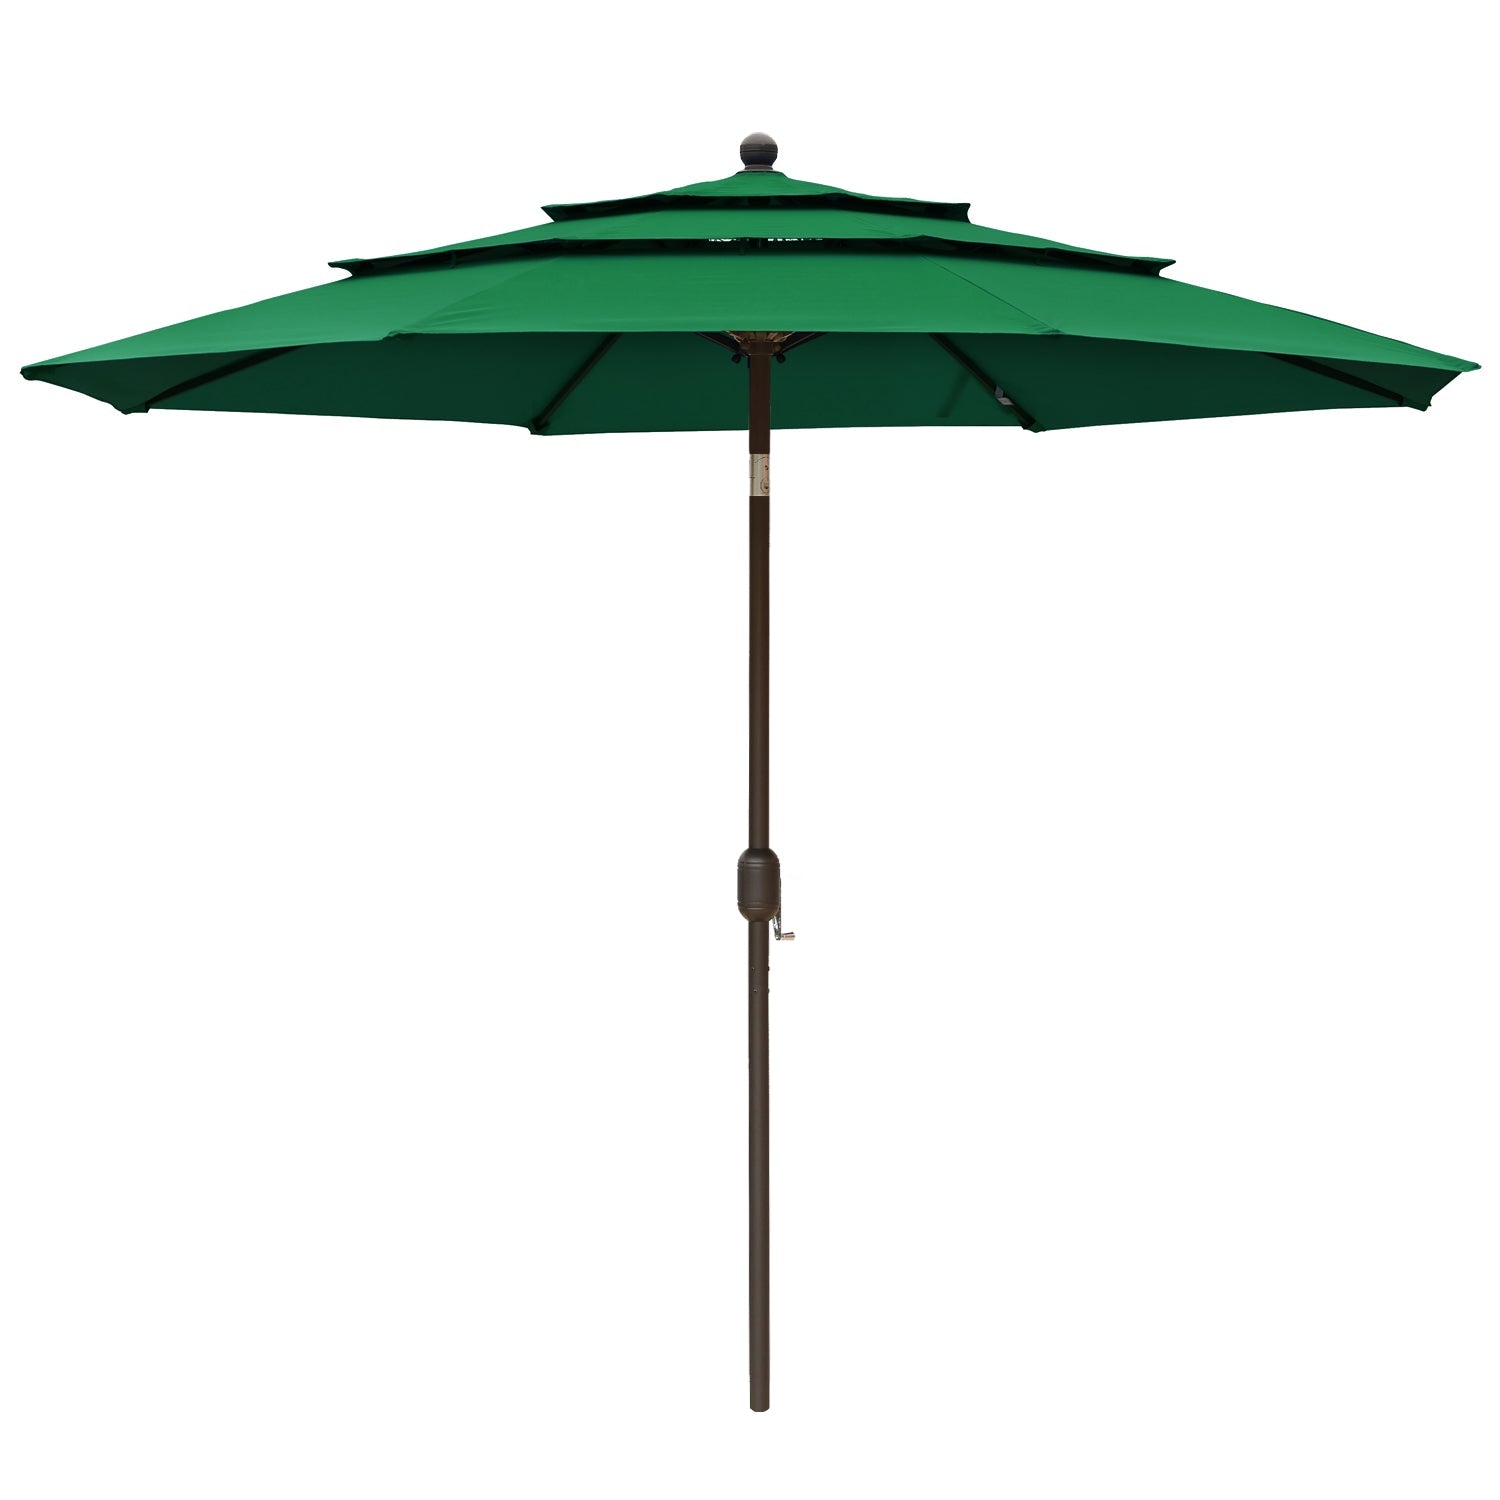 3 Tier 10ft. Patio Umbrella - Market Umbrella with Crank (No Base) Patio Umbrella Aoodor Green  